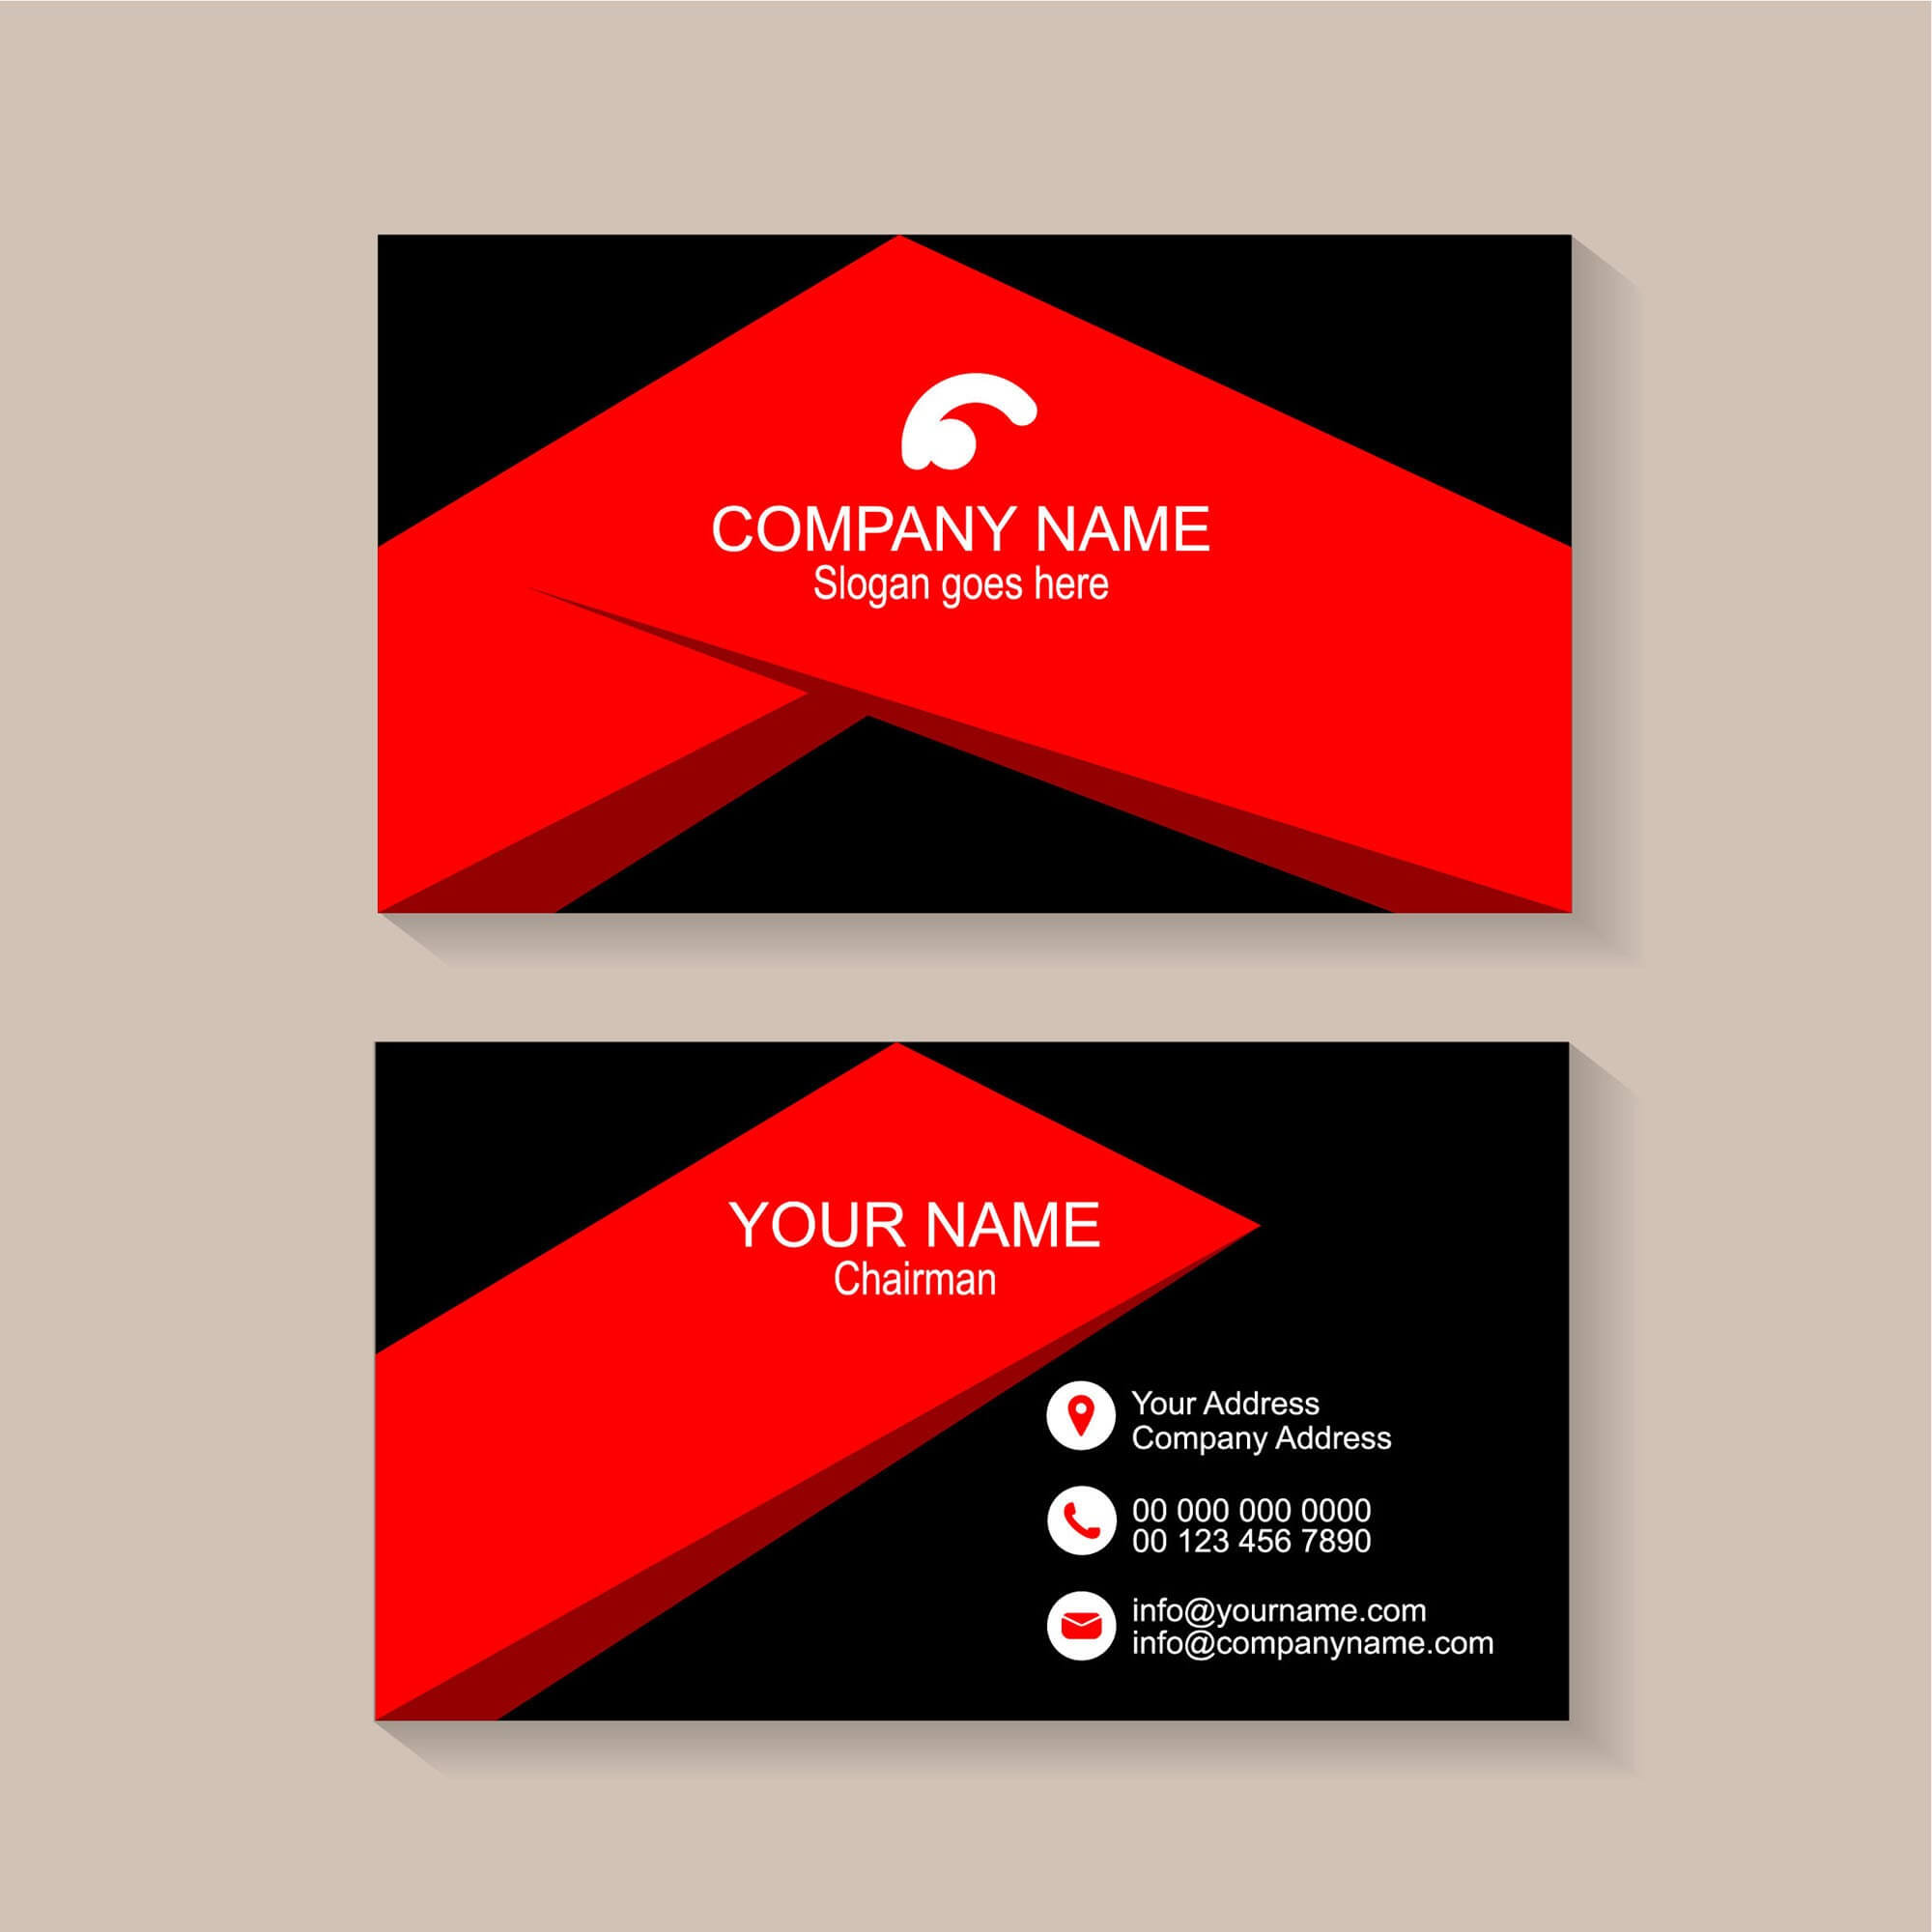 Sample Of Visiting Cards Free Modern Business Card Templates Inside Designer Visiting Cards Templates